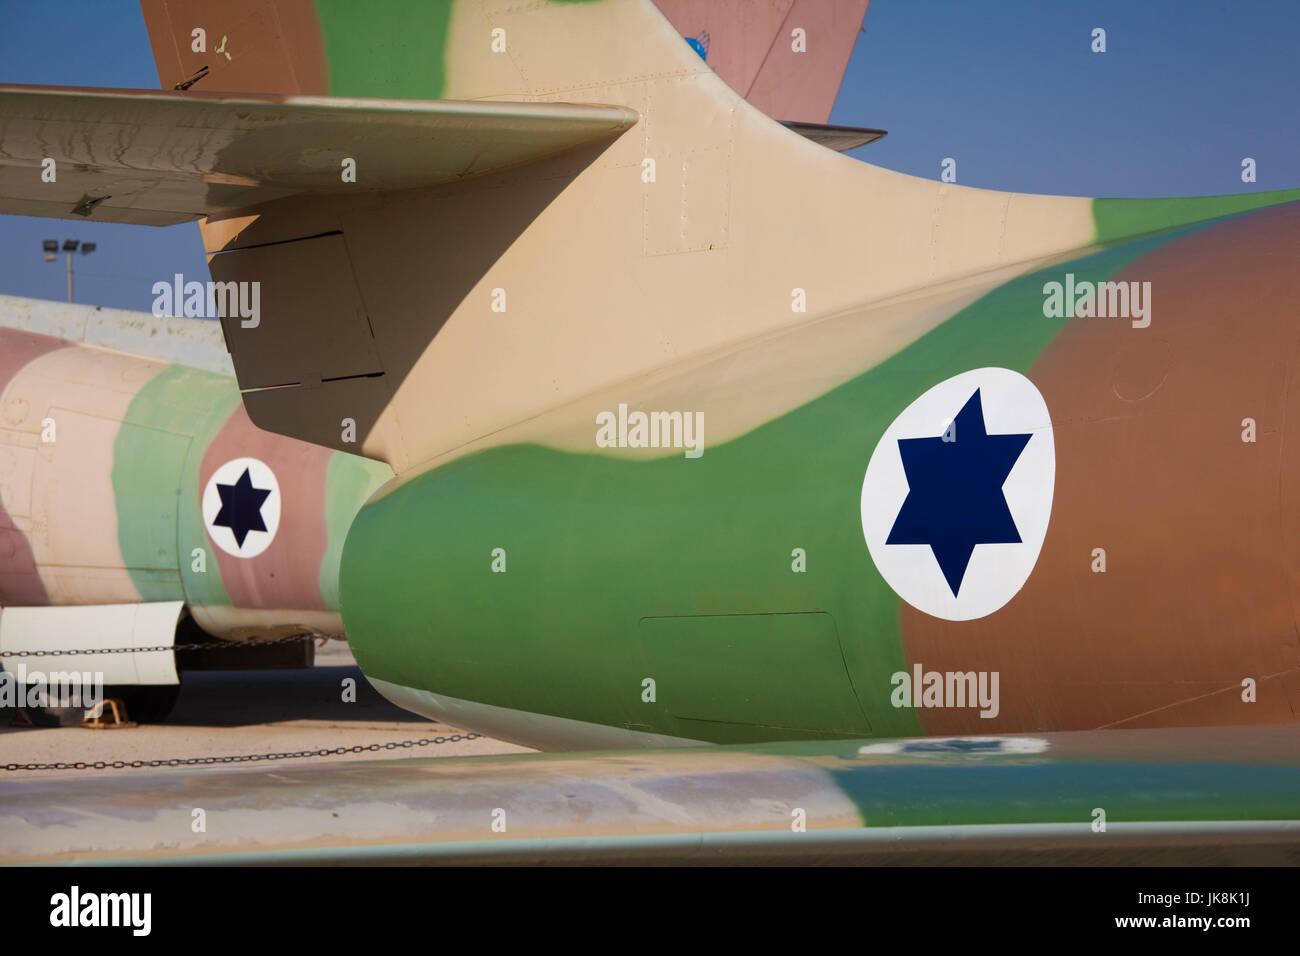 Israele, il Neghev, essere-er Sheva, Israeliano Air Force Museum, Hatzerim Israeli Air Force Base, Israeliano insegne sul mimetizzata aeromobile Foto Stock